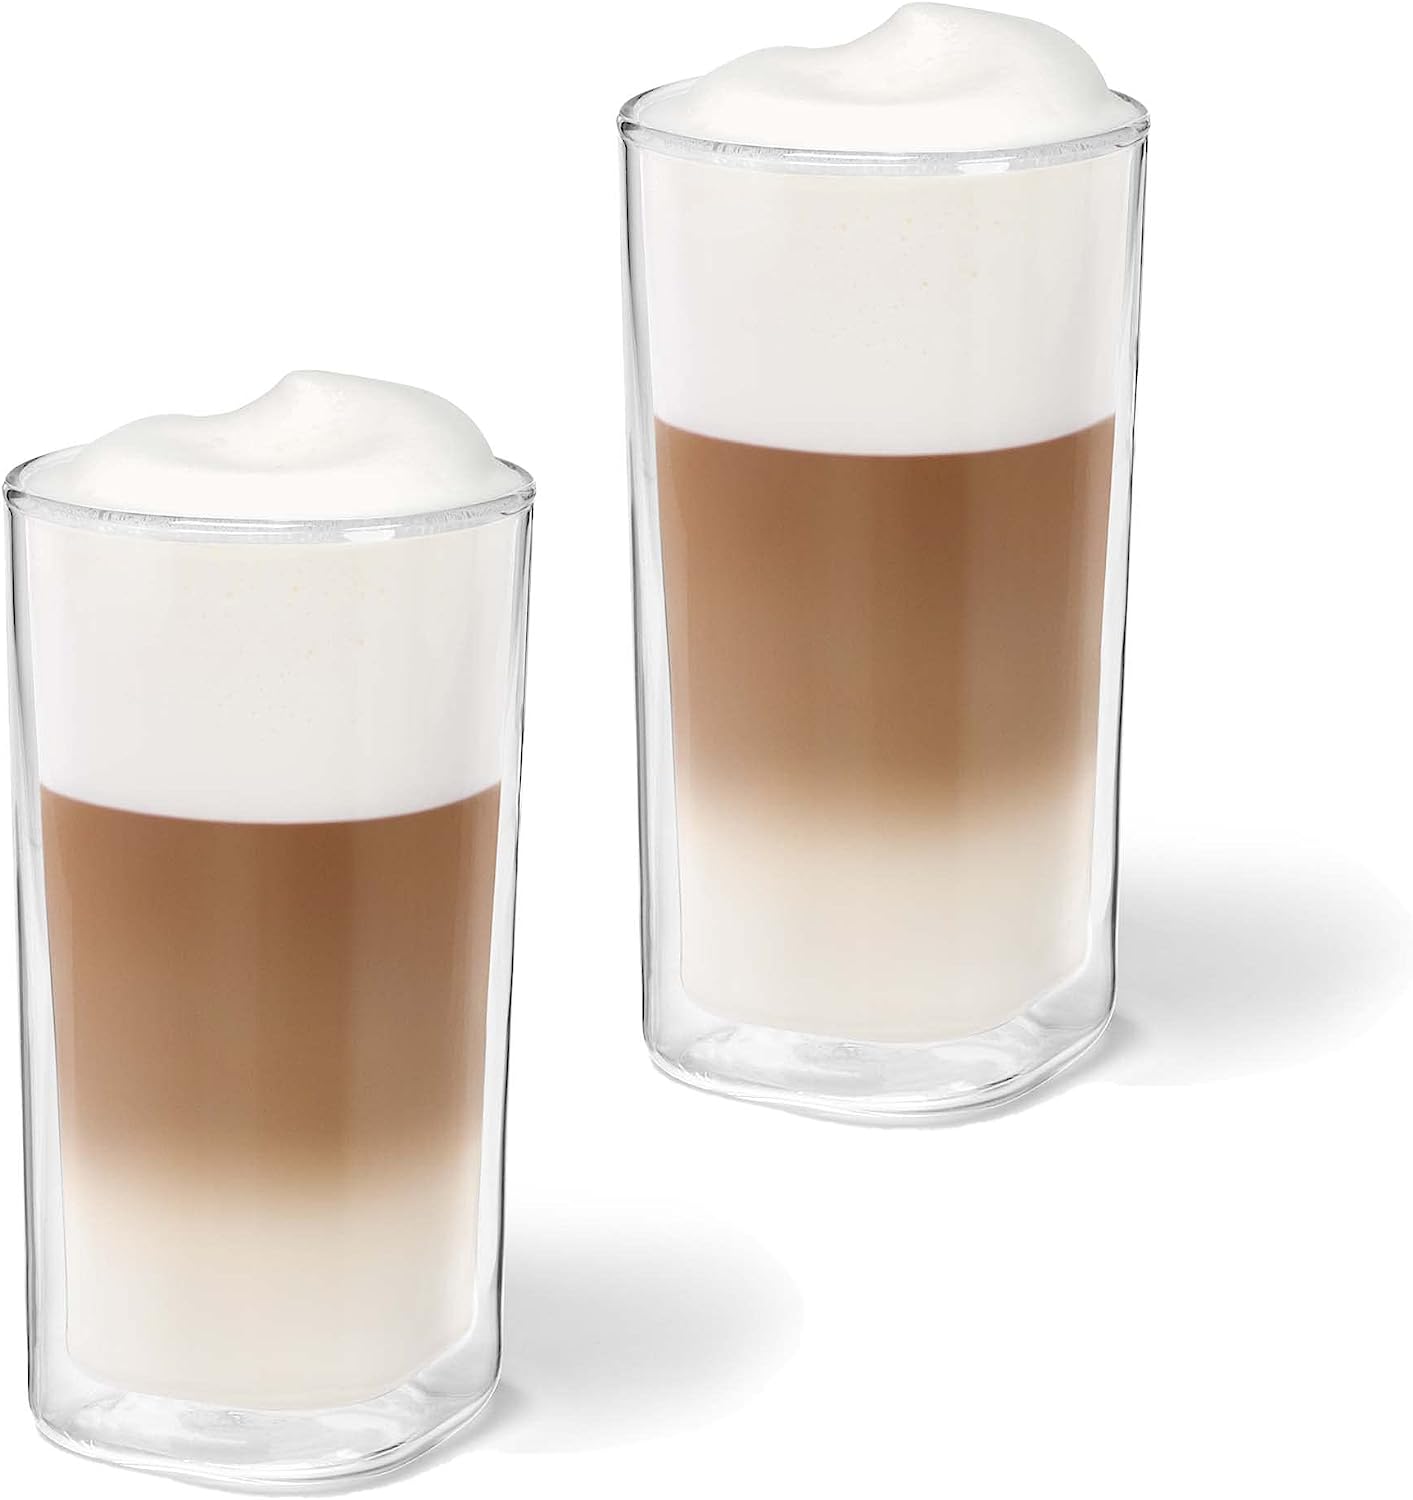 Tchibo QBO Set of 2 Latte Macchiato Glasses, High Quality Glass, Mouth-Blown, Lasered QBO Logo, Enjoy Hot and Cold